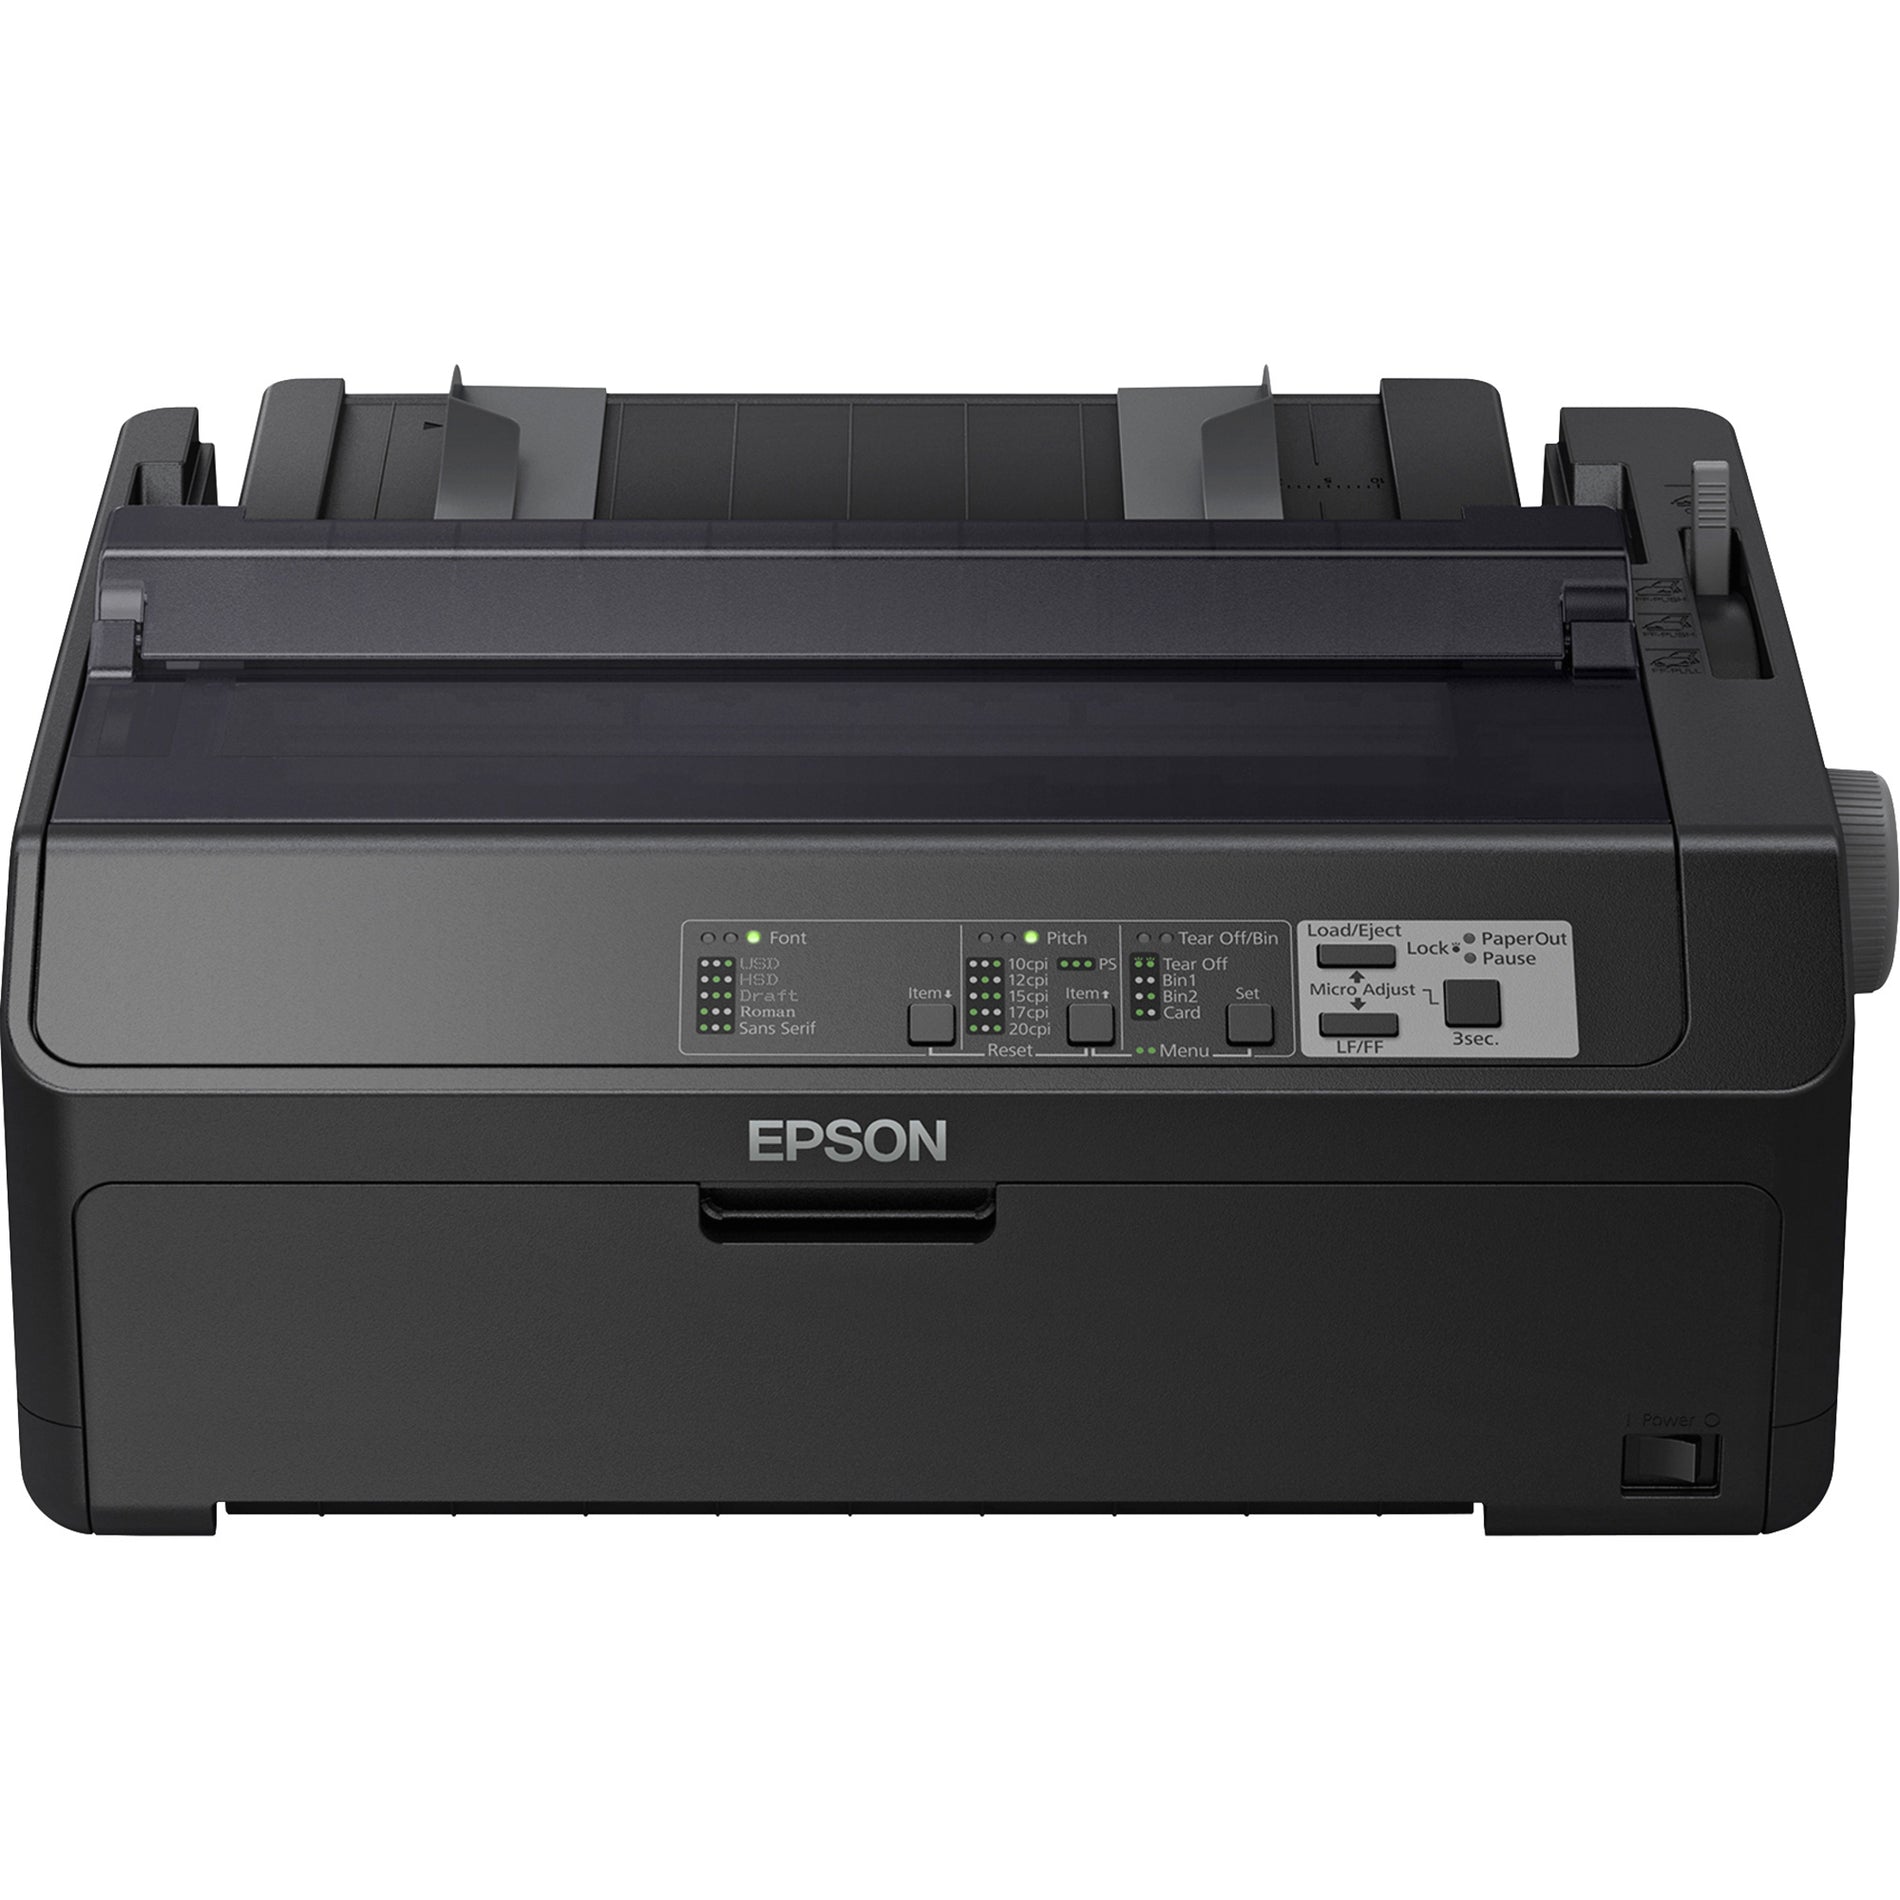 Epson C11CF37201 FX-890II Impact Printer, 9-Pin, Serial Dot Matrix, 55dB, Black/Gray